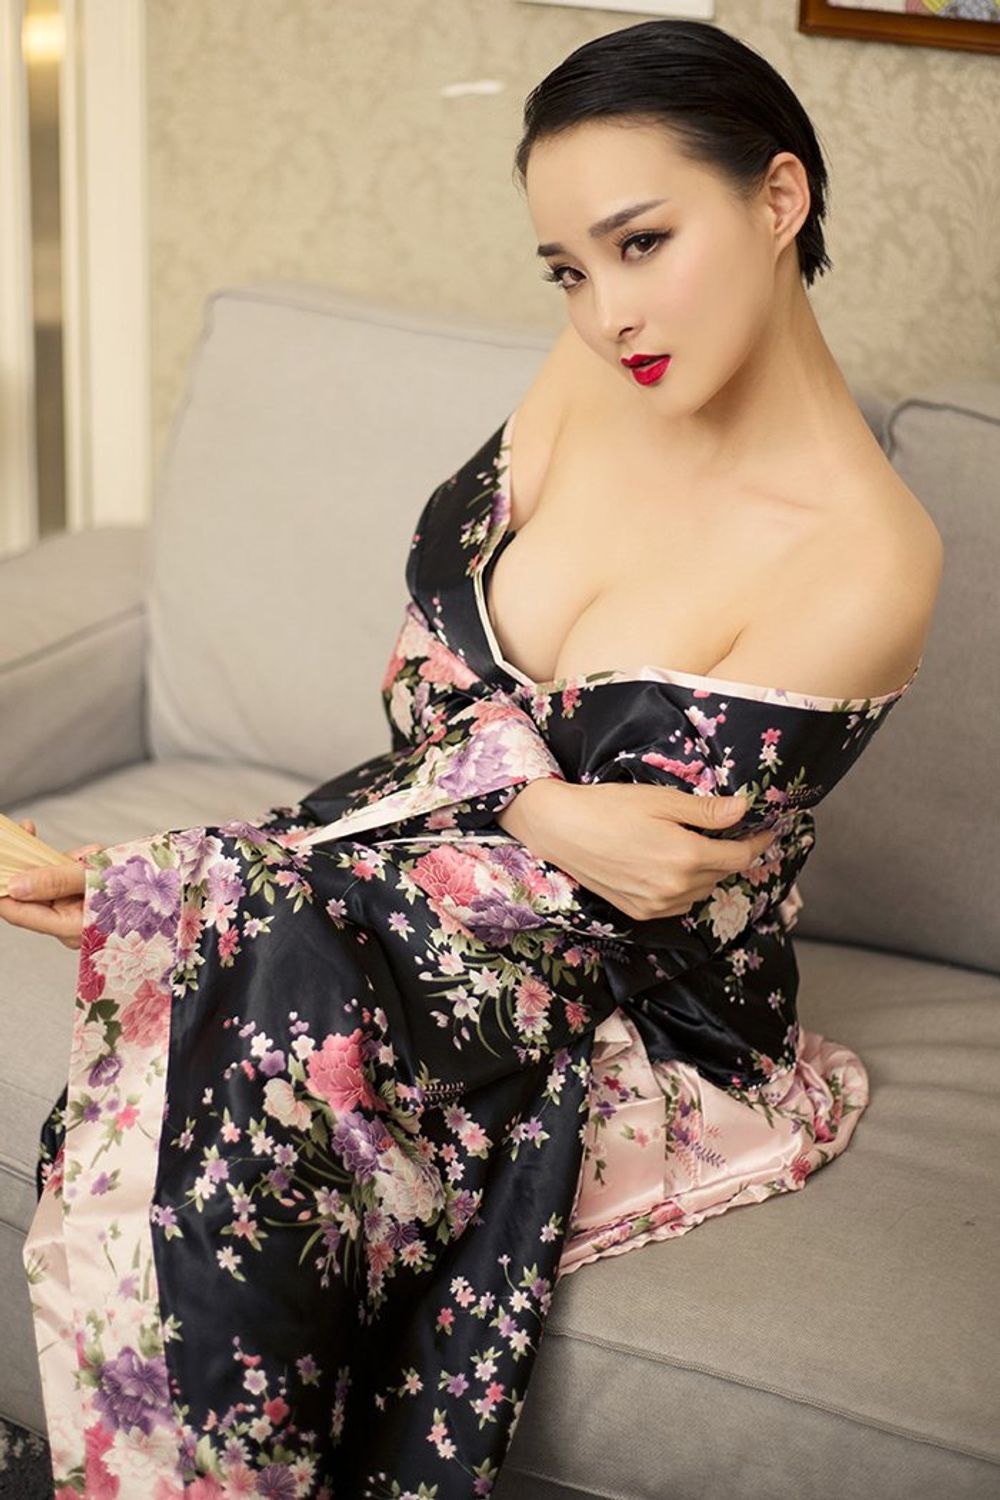 Kimono sister Zhou Xi loves black silk buttocks to make people swell